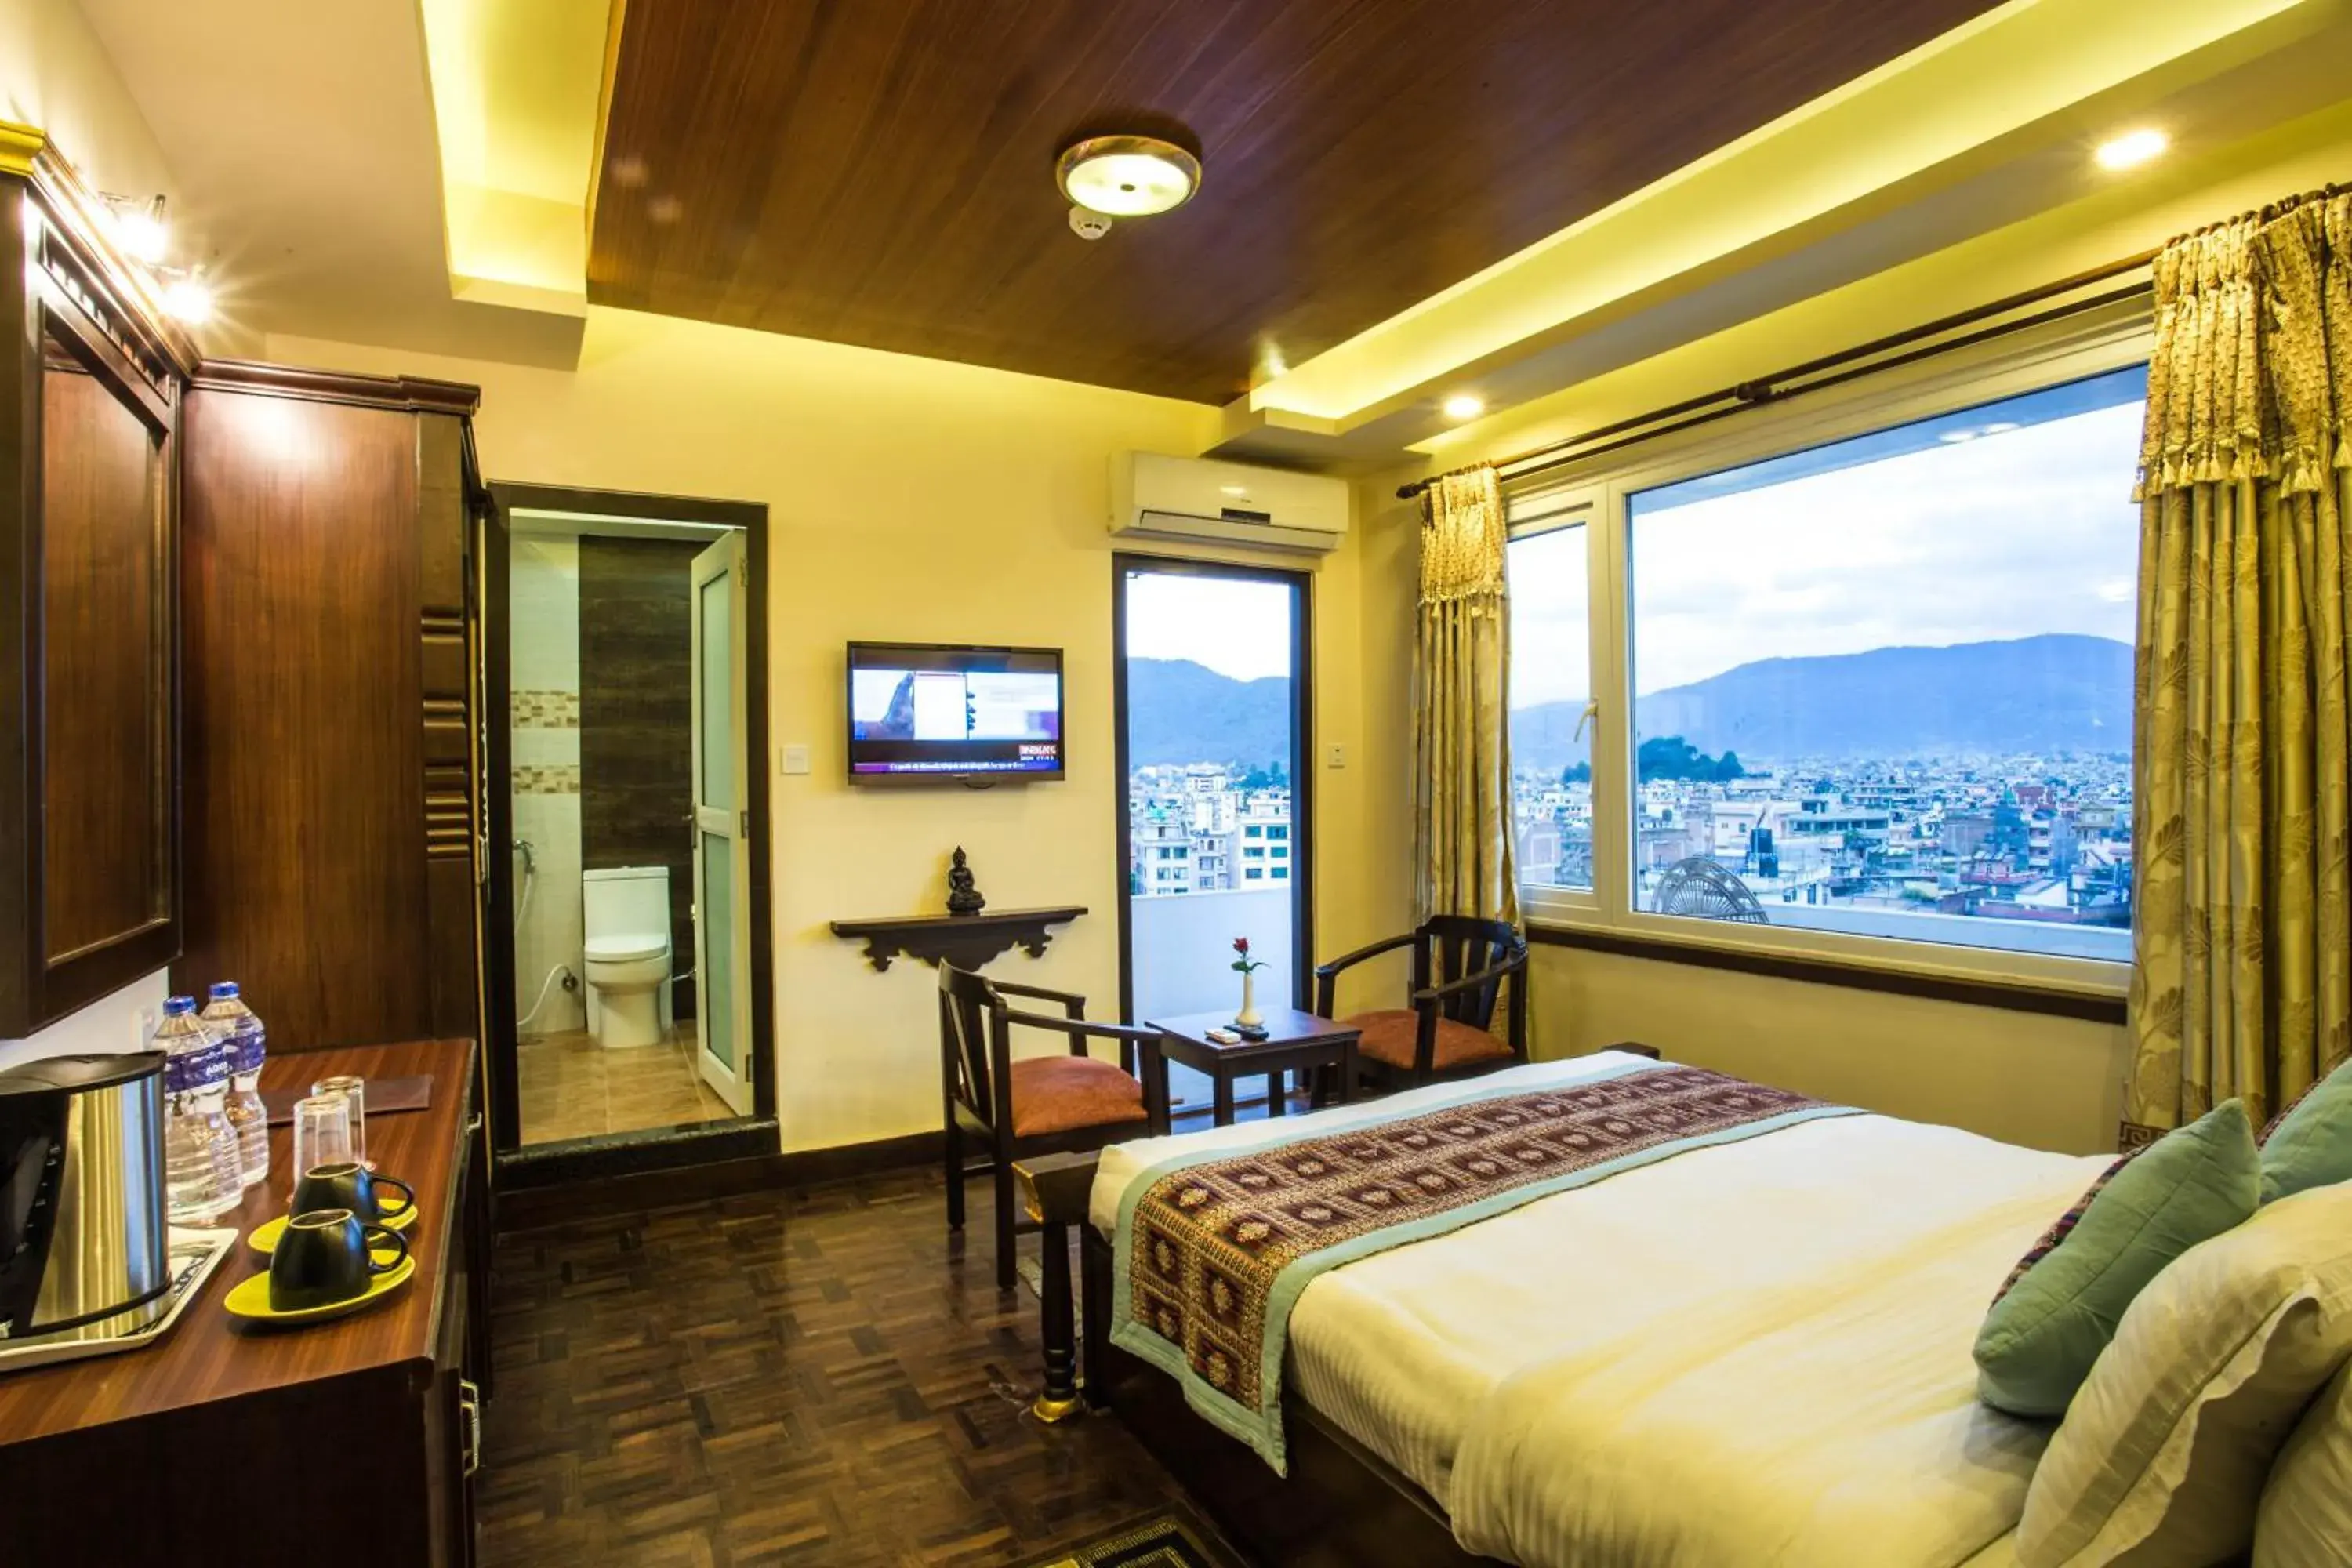 Bedroom, Room Photo in Hotel Encounter Nepal